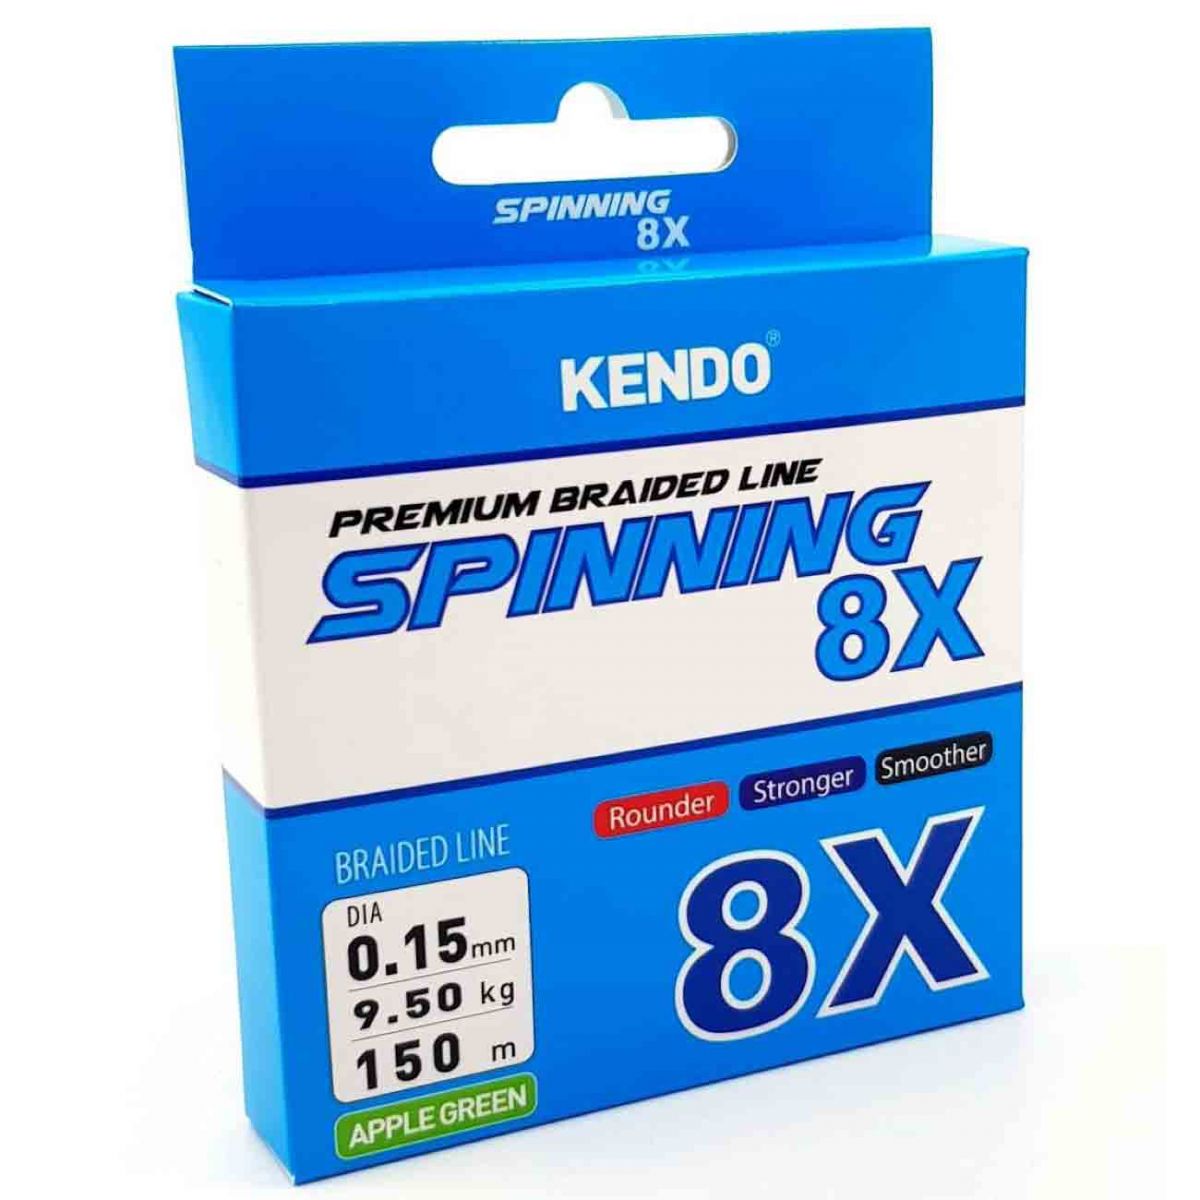 Kendo Spinning 8X Fighting 150 Metre İp Misina Elma Yeşili,kendo kalitesinde 8 örgü spin için tasarlanmış ip misina serisi